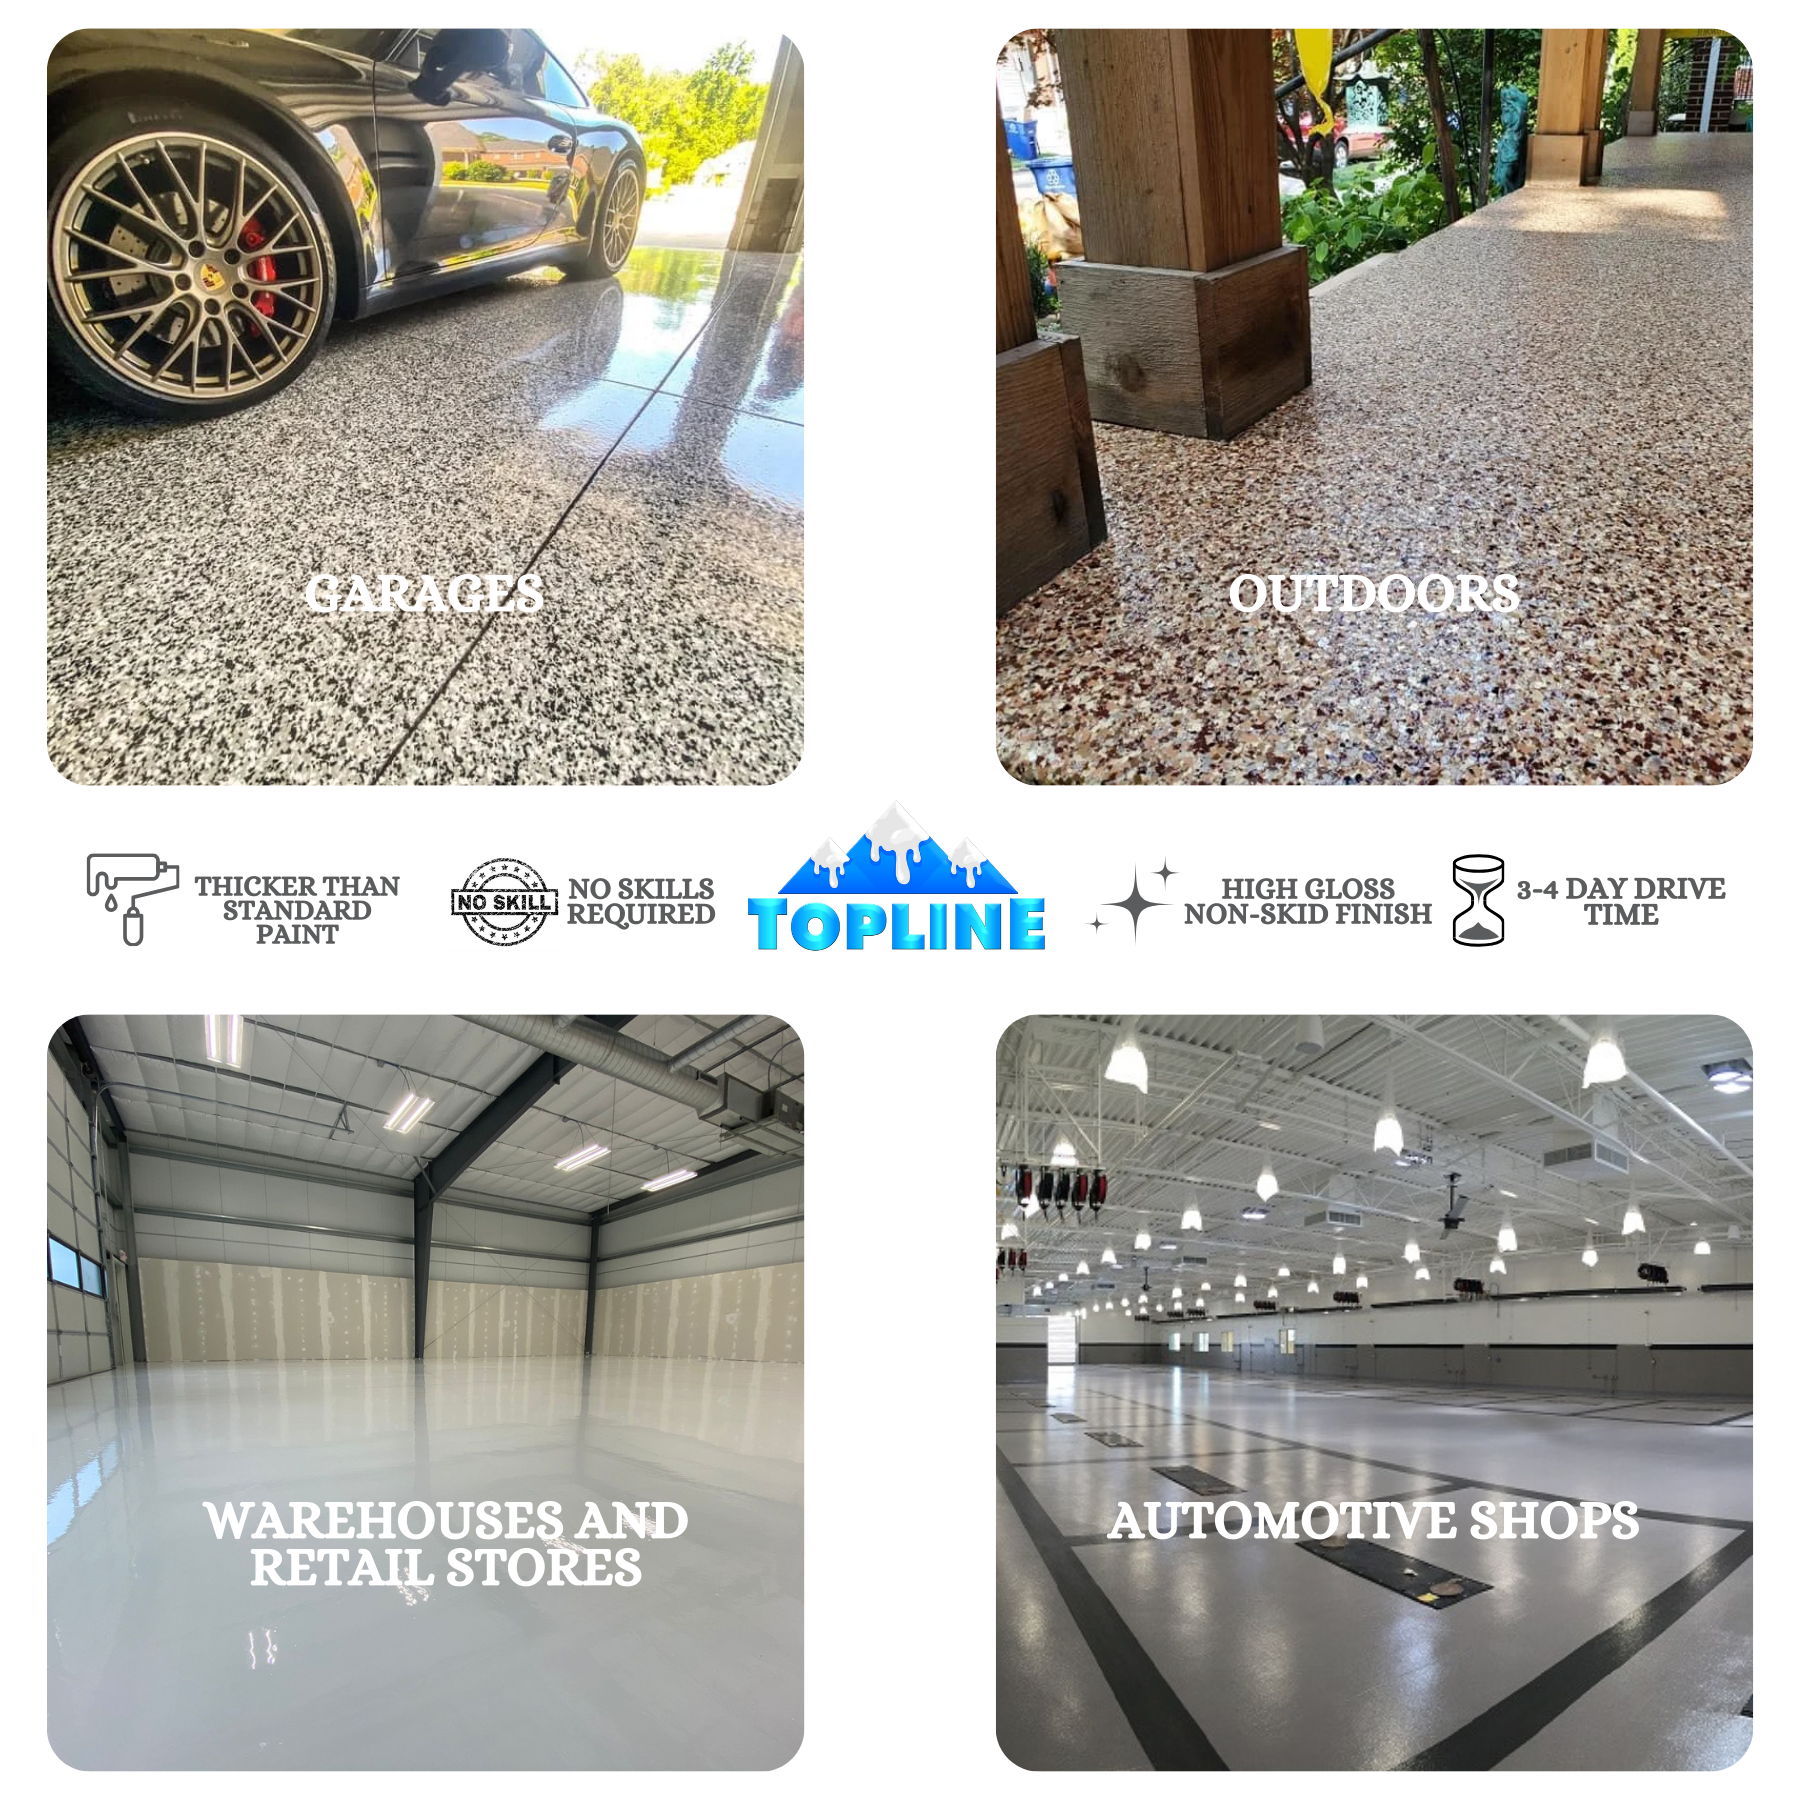 Garage Epoxy Floor Kit for Concrete - 12-Pc 2 Part, Industrial Grade Epoxy Floor Coating, Polyaspartic - 400 SqFt Coverage- for Garage, Basement, Workshop, Contractor, Automotive